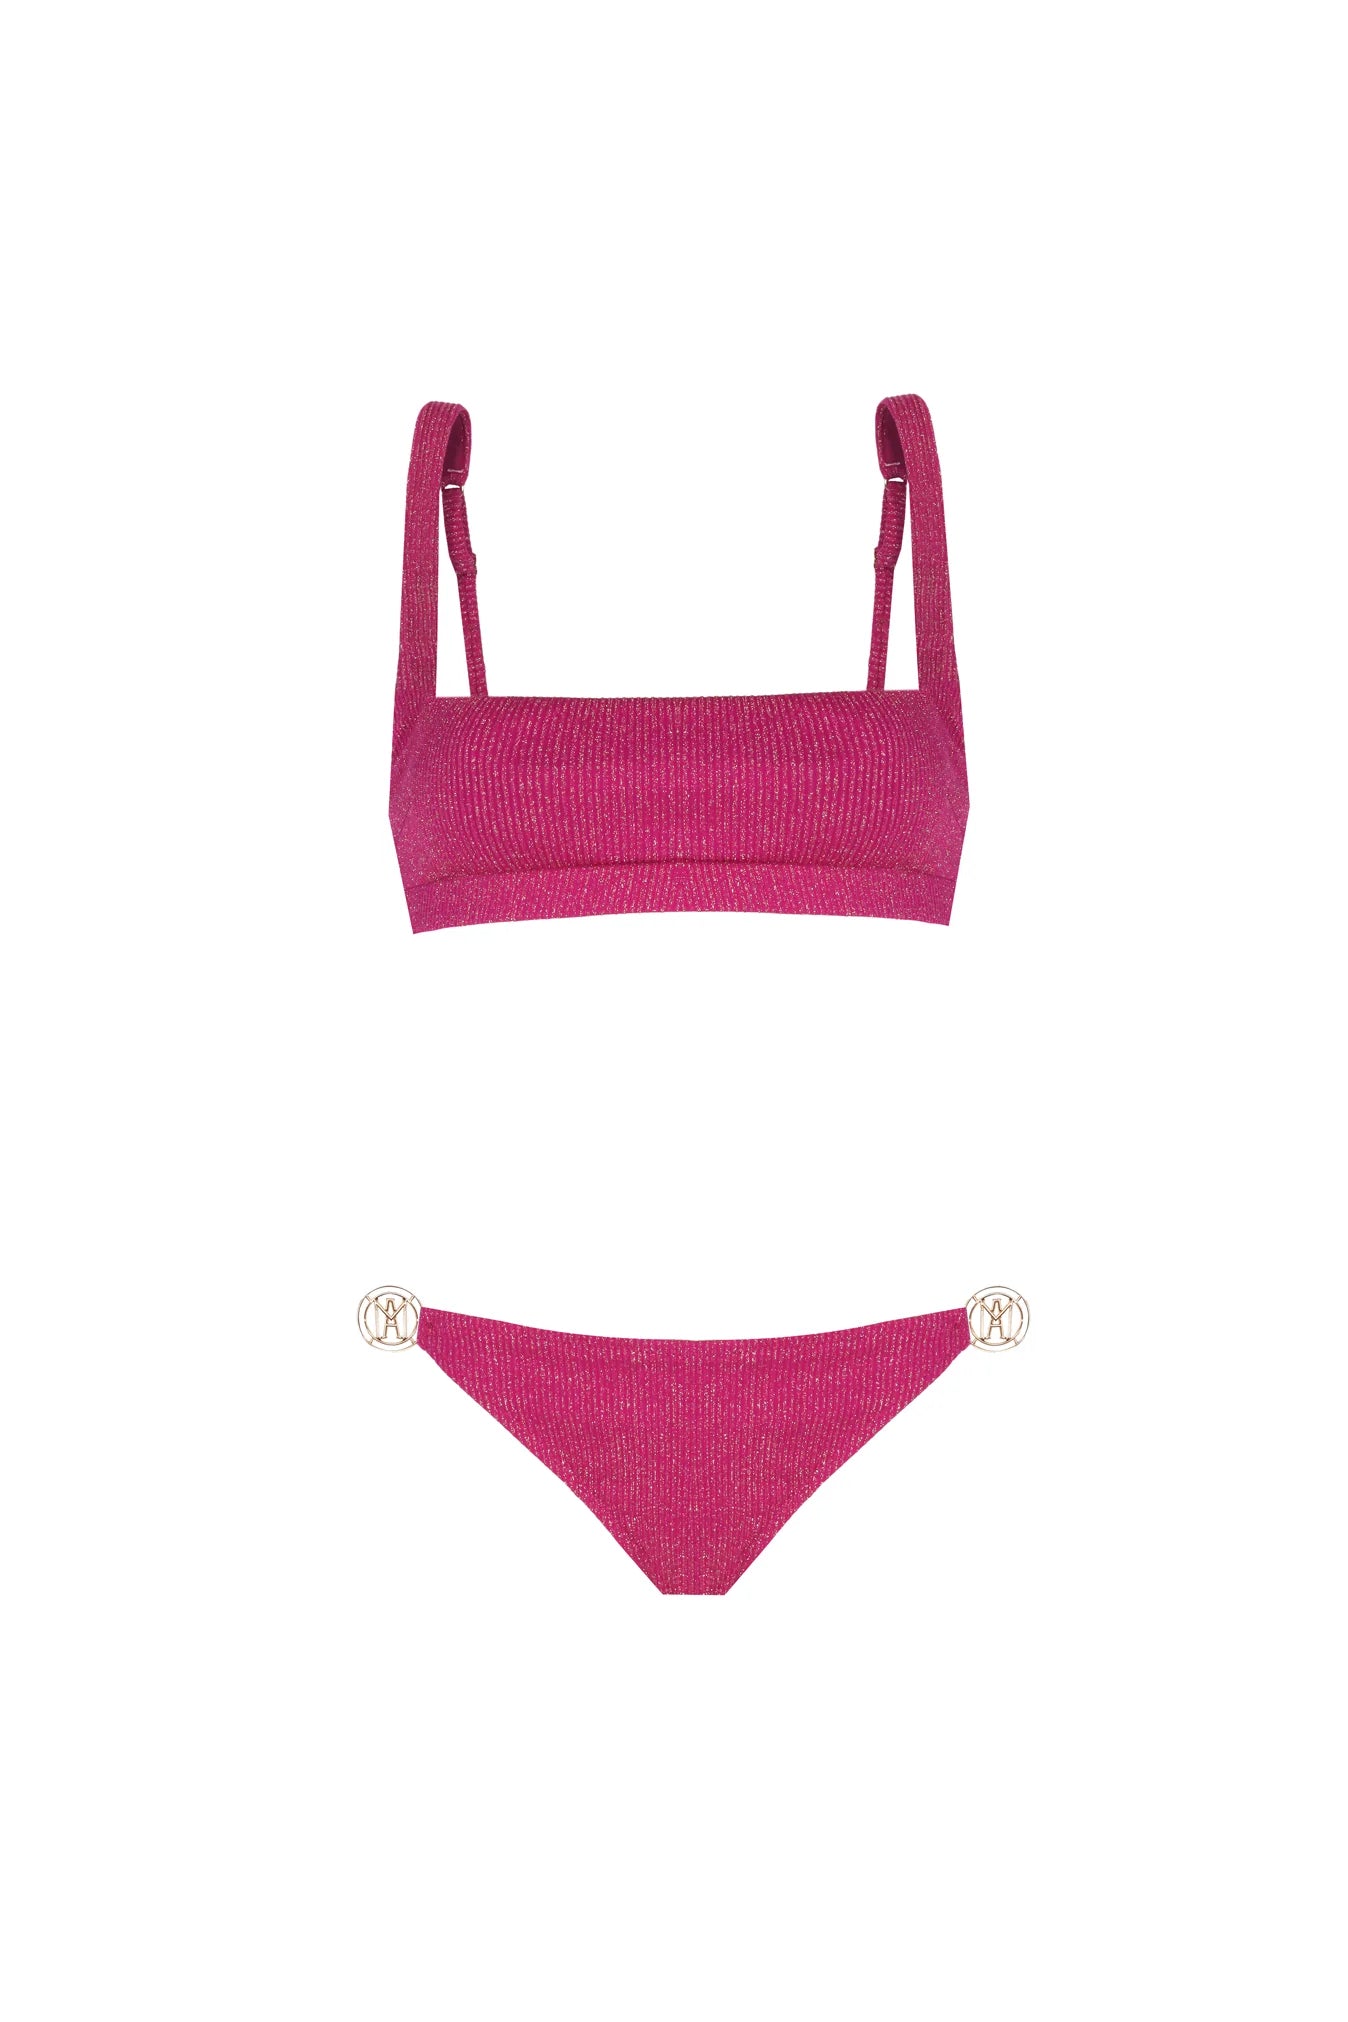 Ninette Pink Shiny Rib Bikini